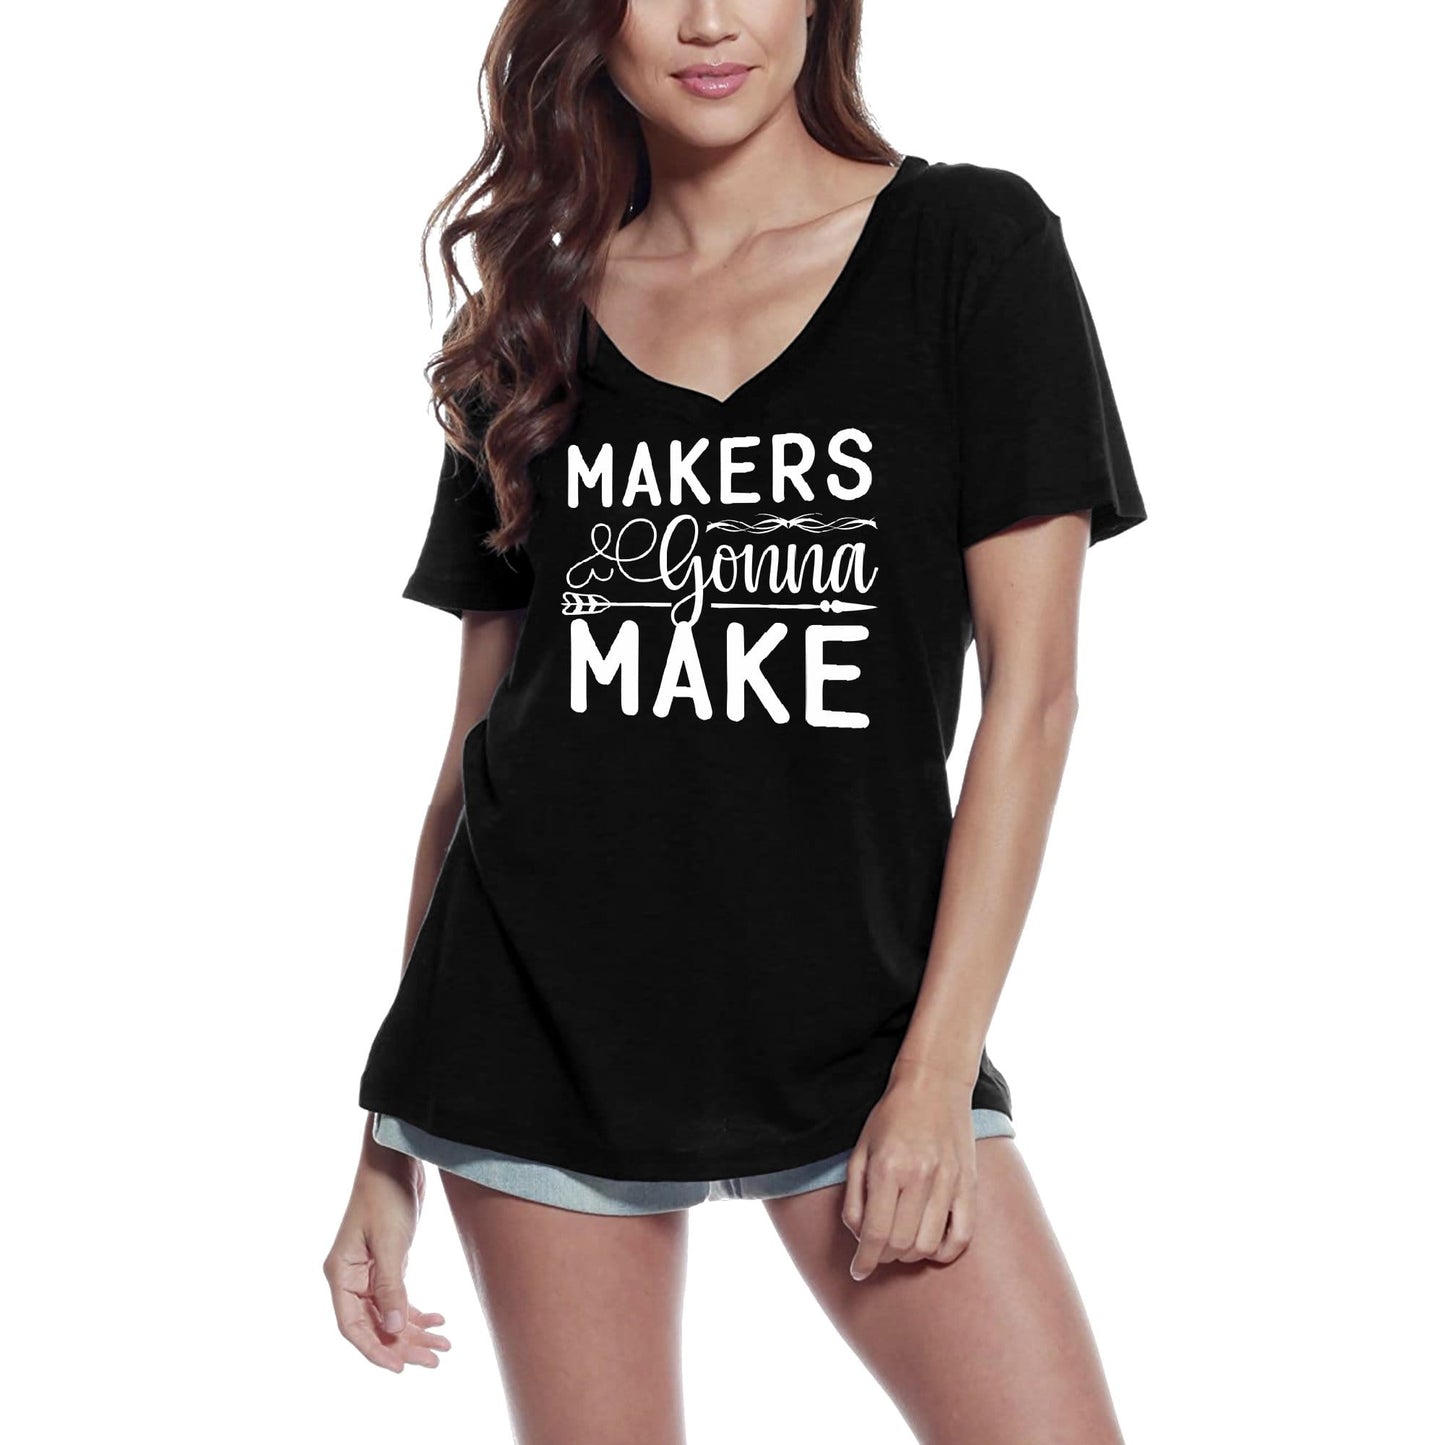 ULTRABASIC Women's T-Shirt Makers Gonna Make - Short Sleeve Tee Shirt Tops